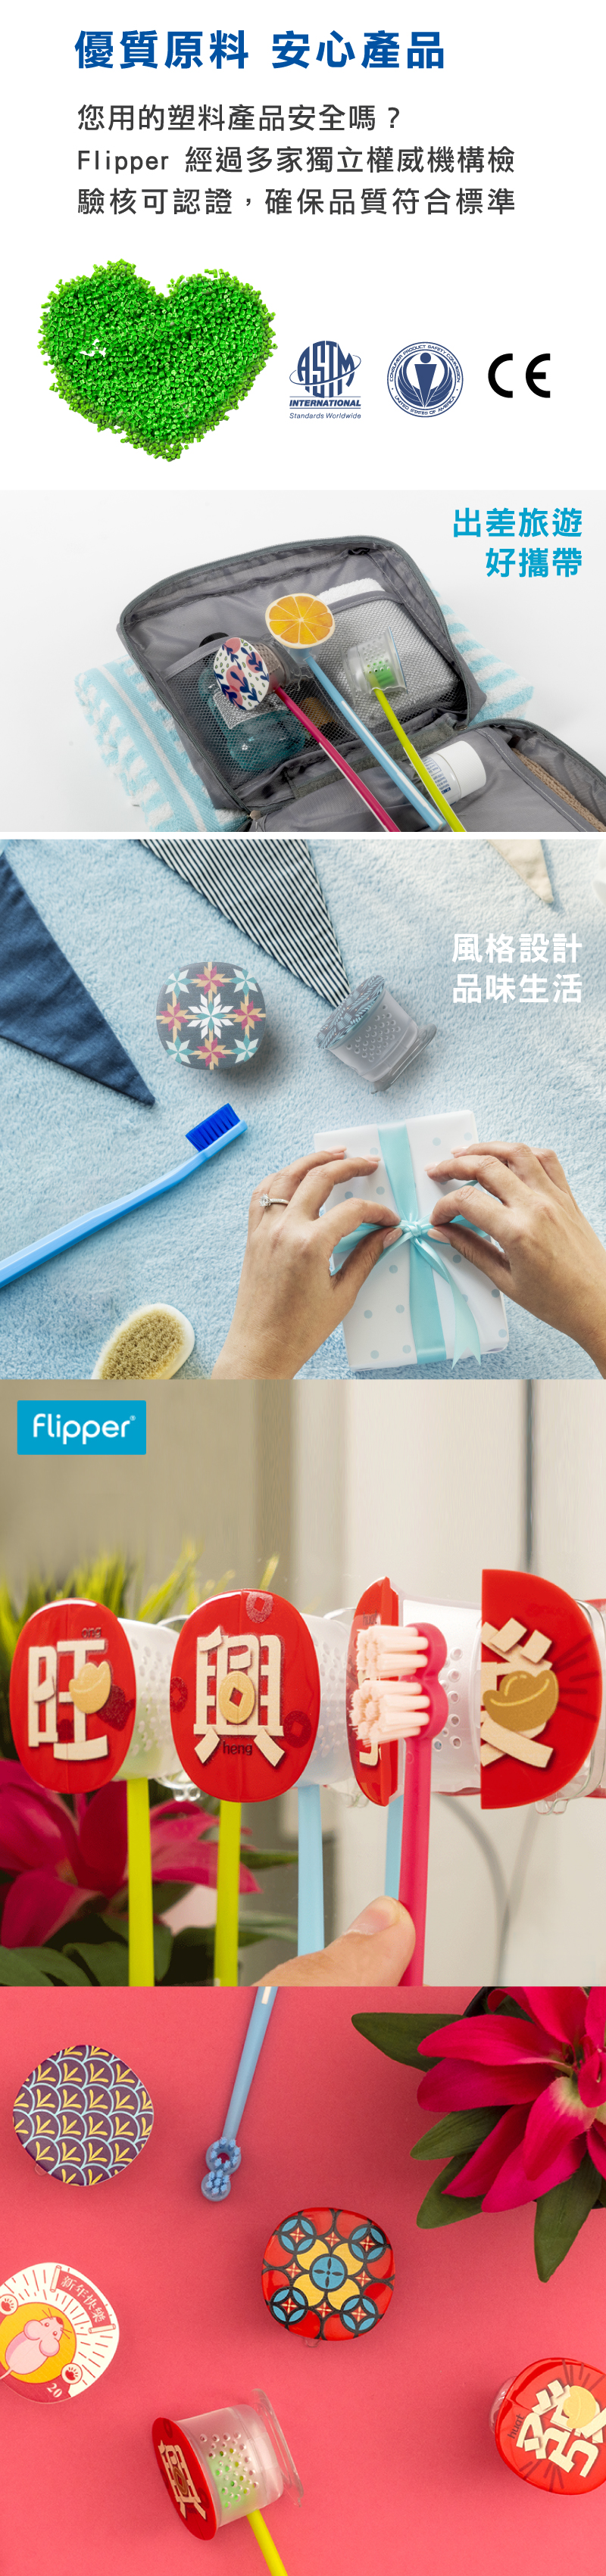 Flipper-play系列-網推2.jpg